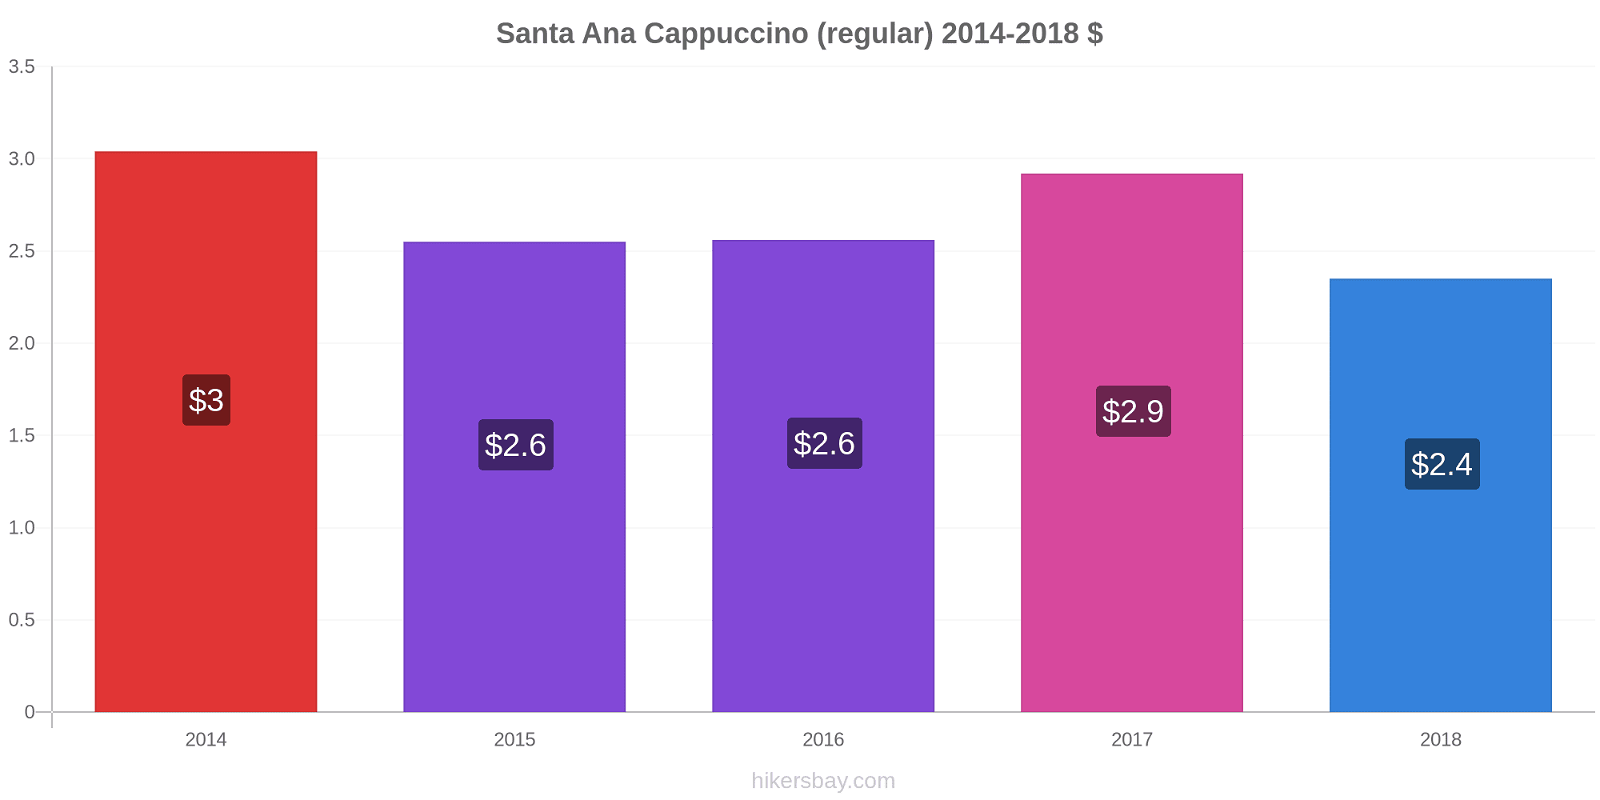 Santa Ana price changes Cappuccino (regular) hikersbay.com